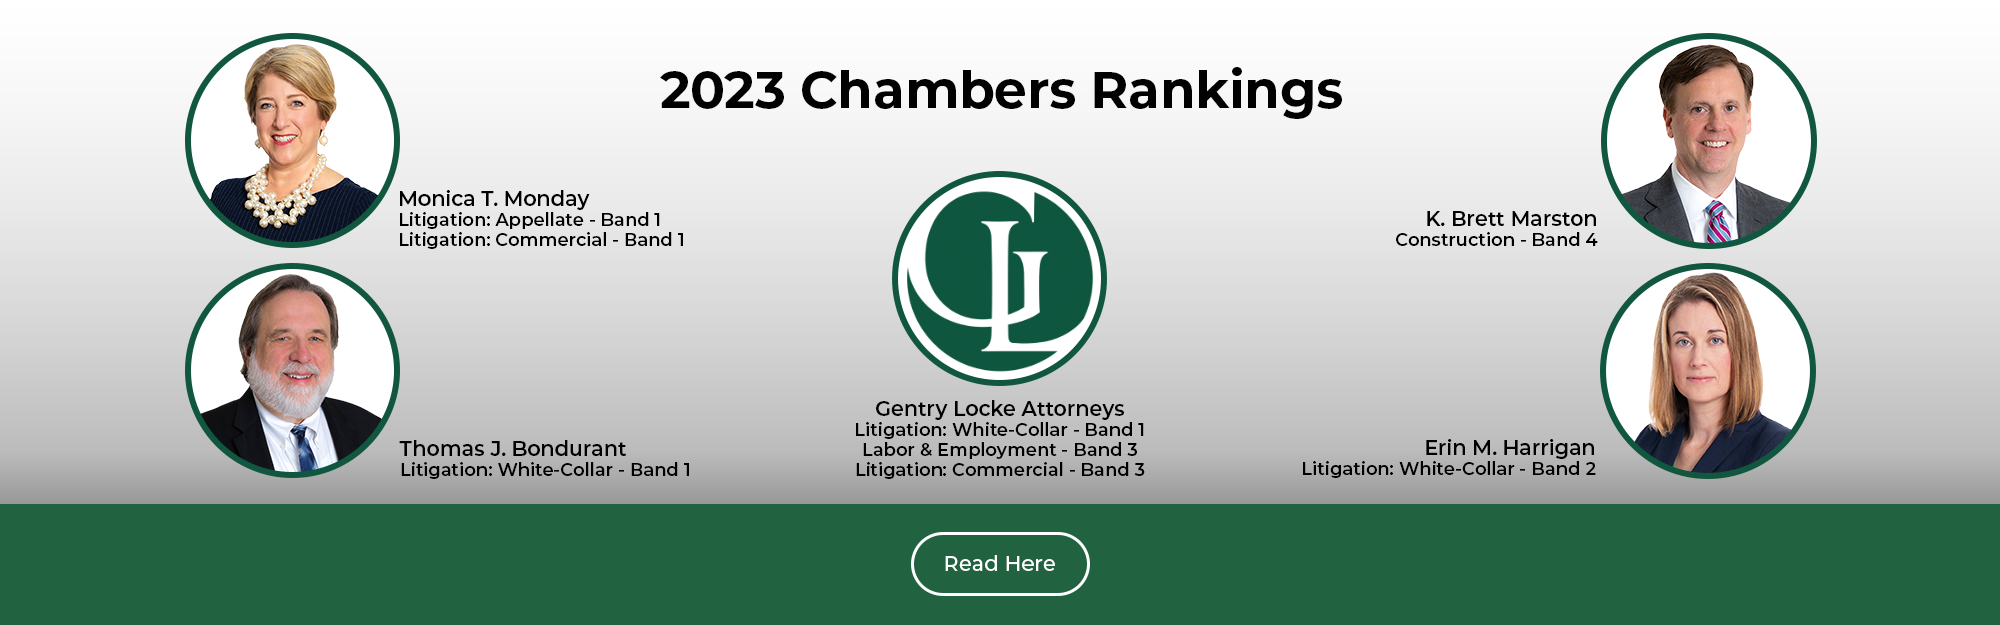 2023 Gentry Locke Attorneys Chamber Rankings